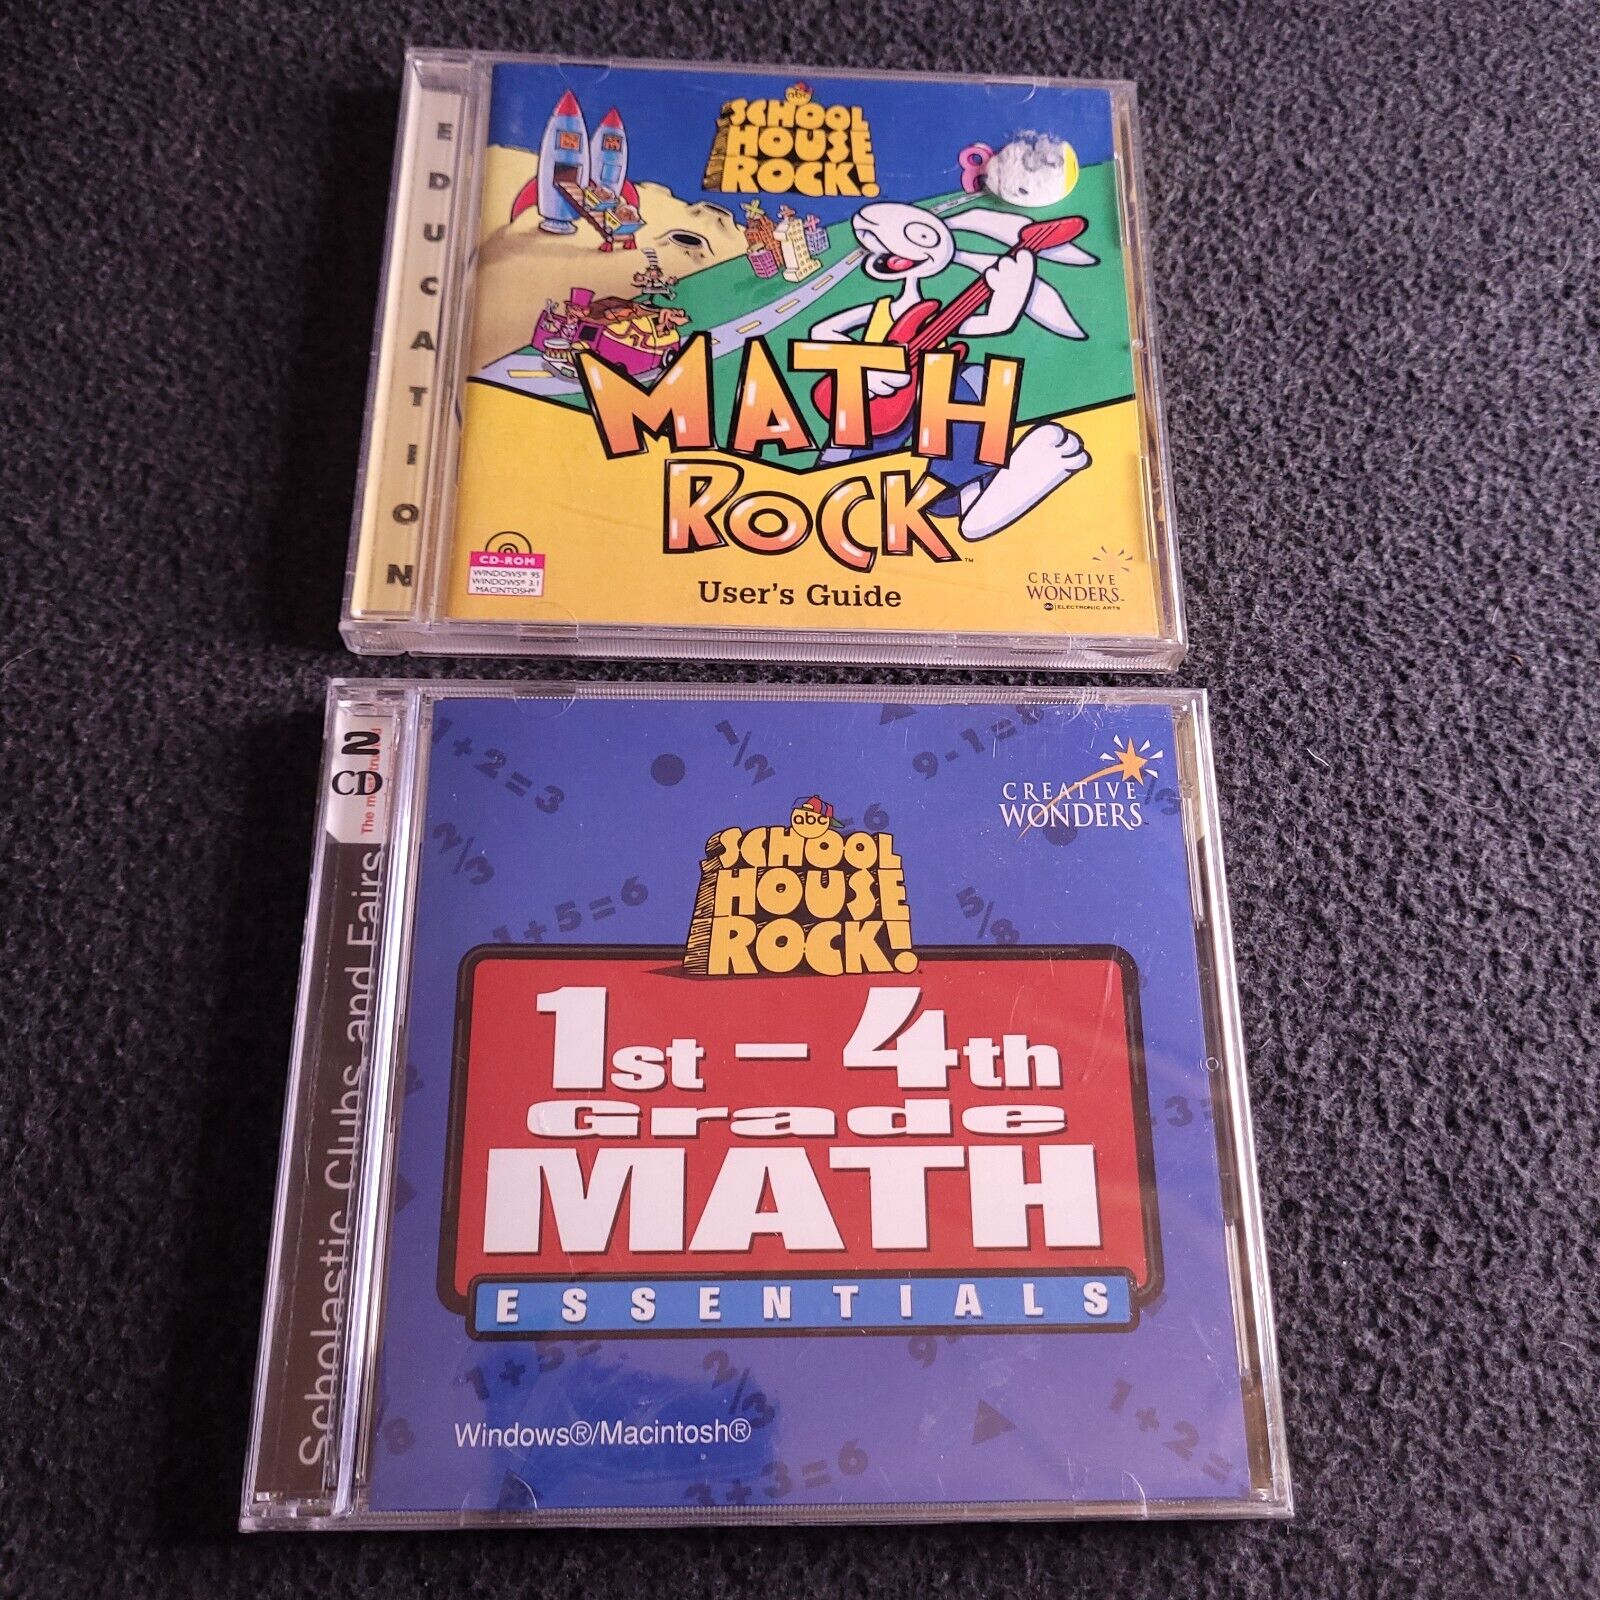 Schoolhouse Rock: 1st - 4th Grade Math Set Essentials PC CD-ROM Windows 95 Mac